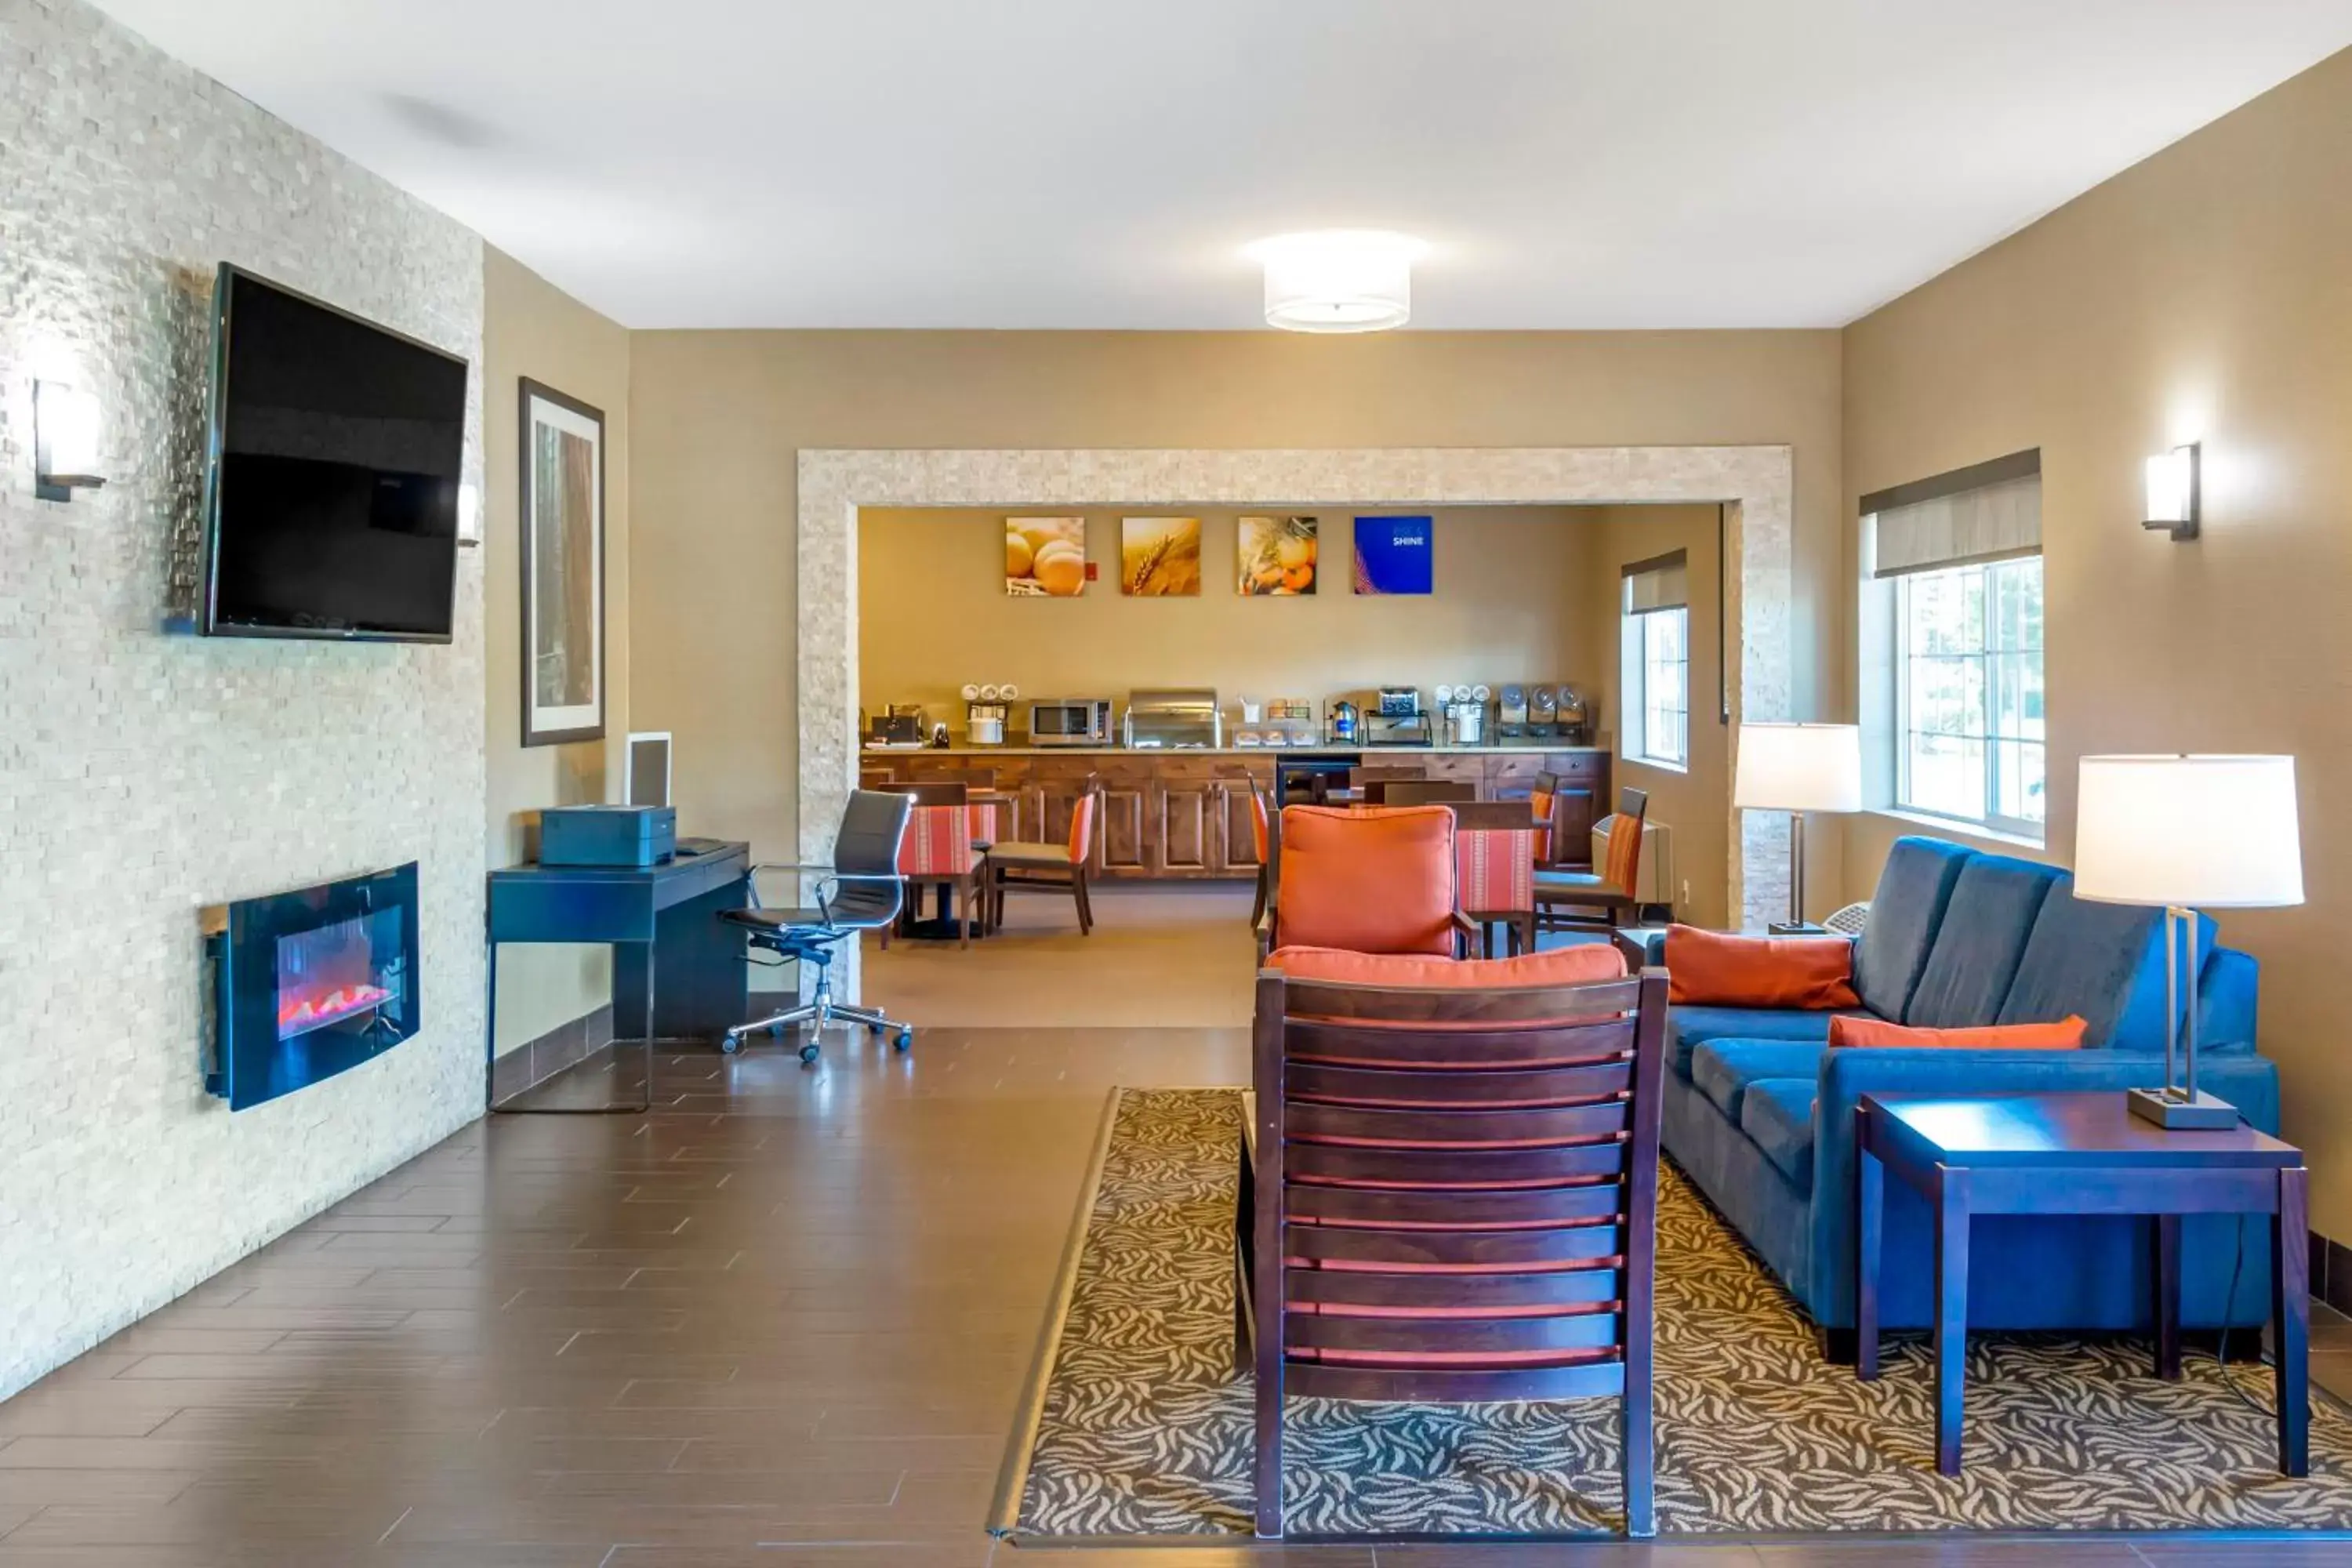 Lobby or reception in Comfort Inn Auburn – Seattle